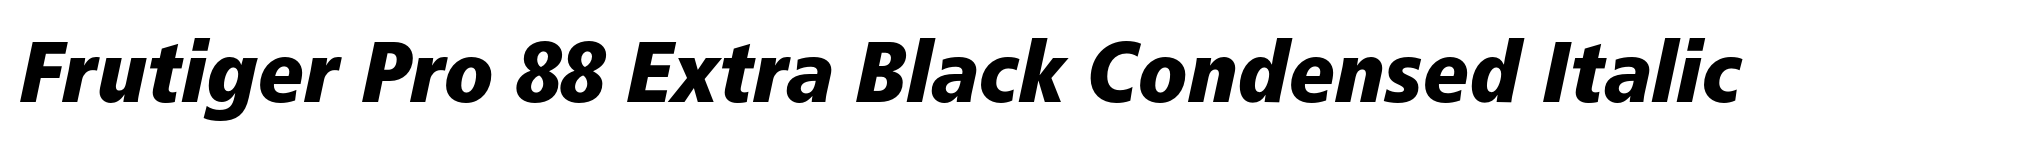 Frutiger Pro 88 Extra Black Condensed Italic image